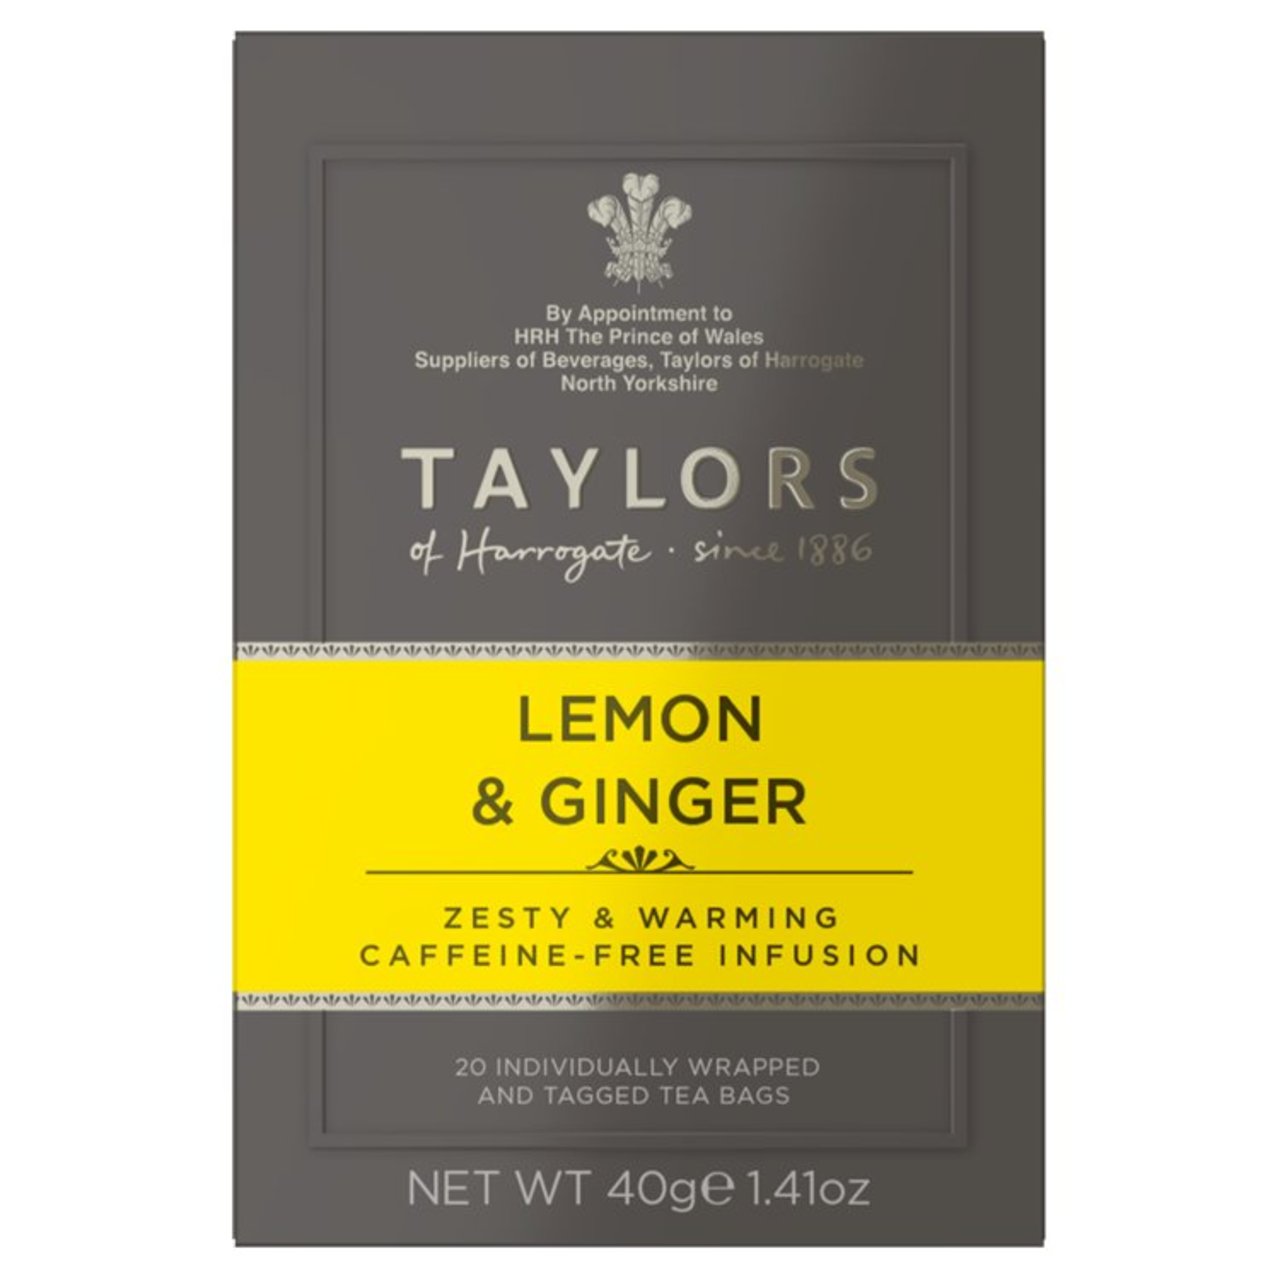 Lemon & Ginger Tea - The Great Yorkshire Shop